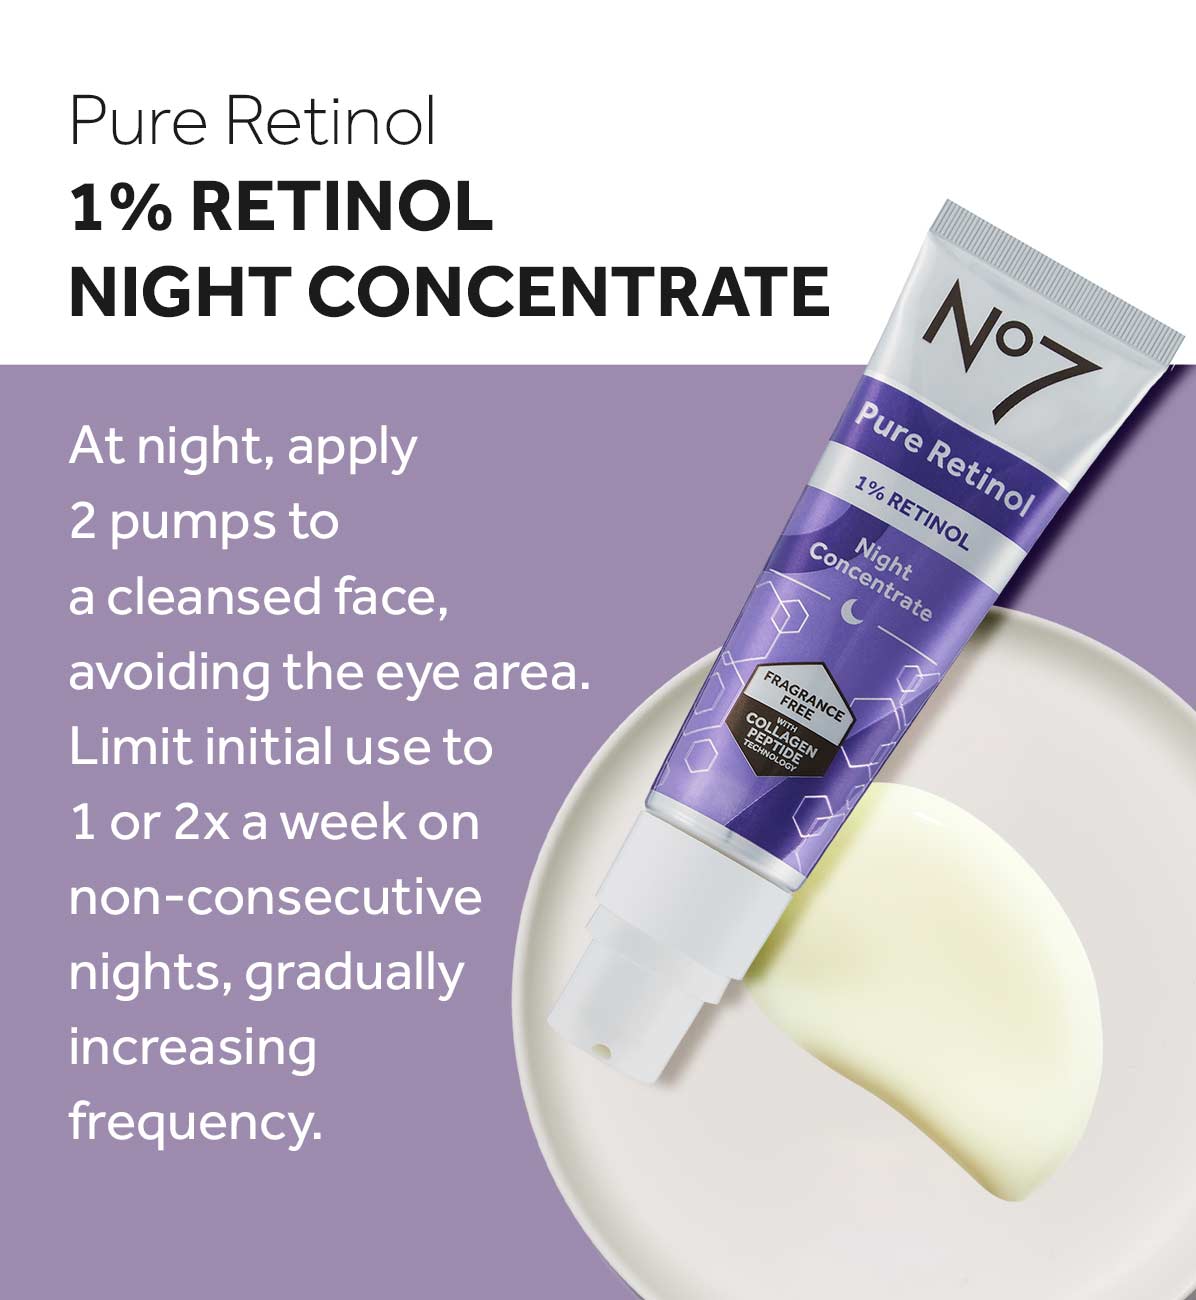 Pure Retinol 1% Retinol Night Concentrate how to use 